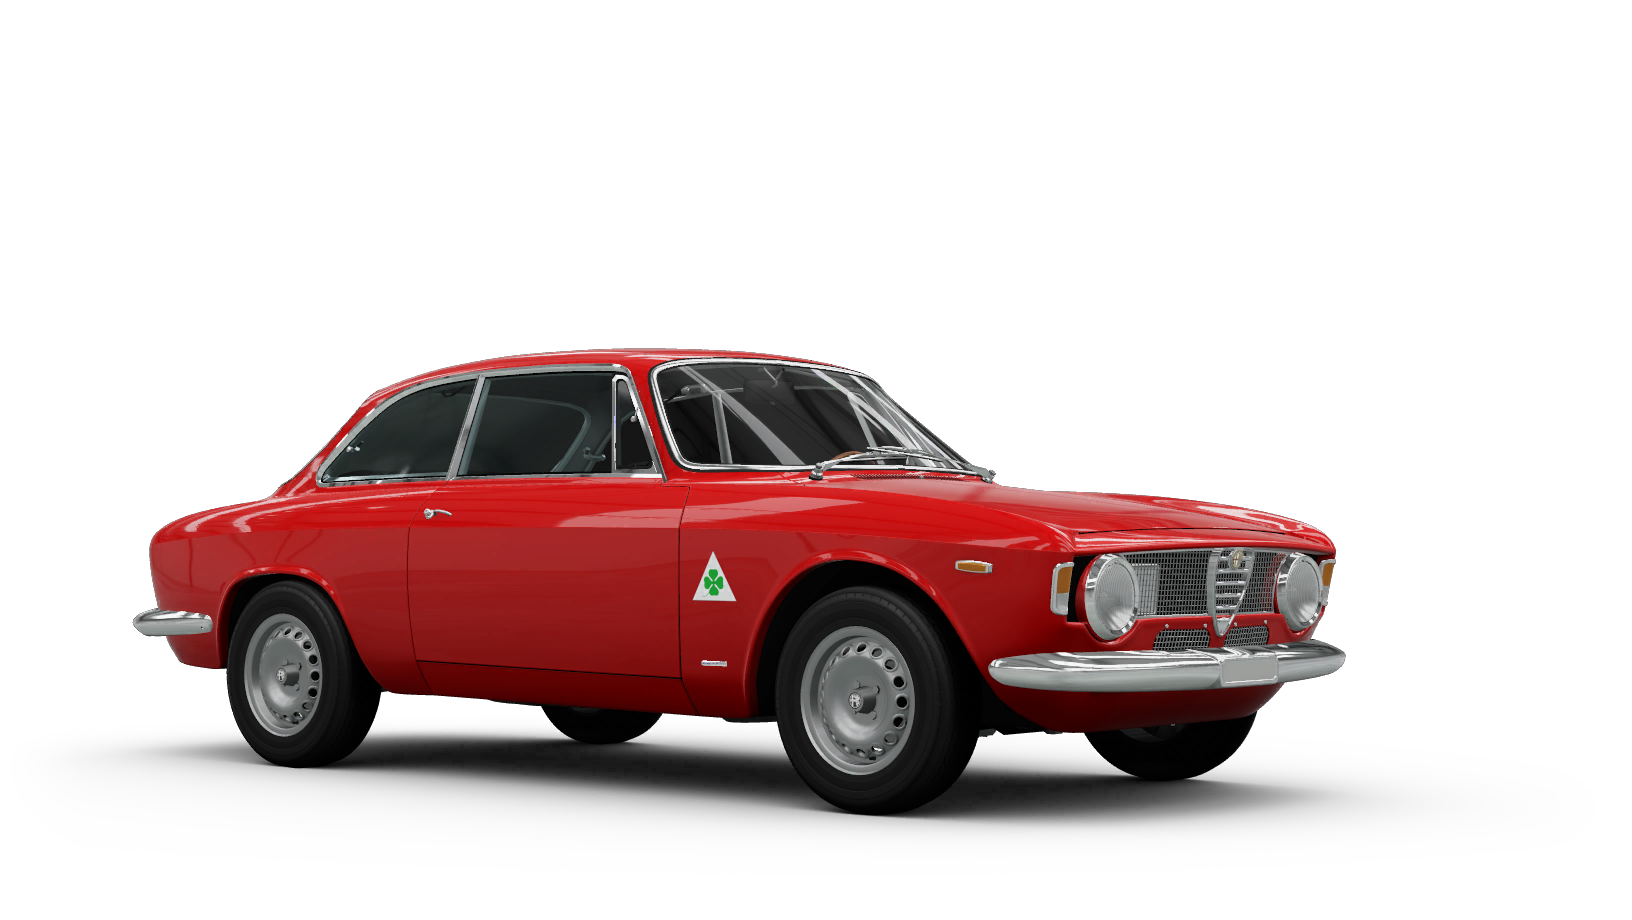 Alfa Romeo - Forza Motorsport Guide - IGN